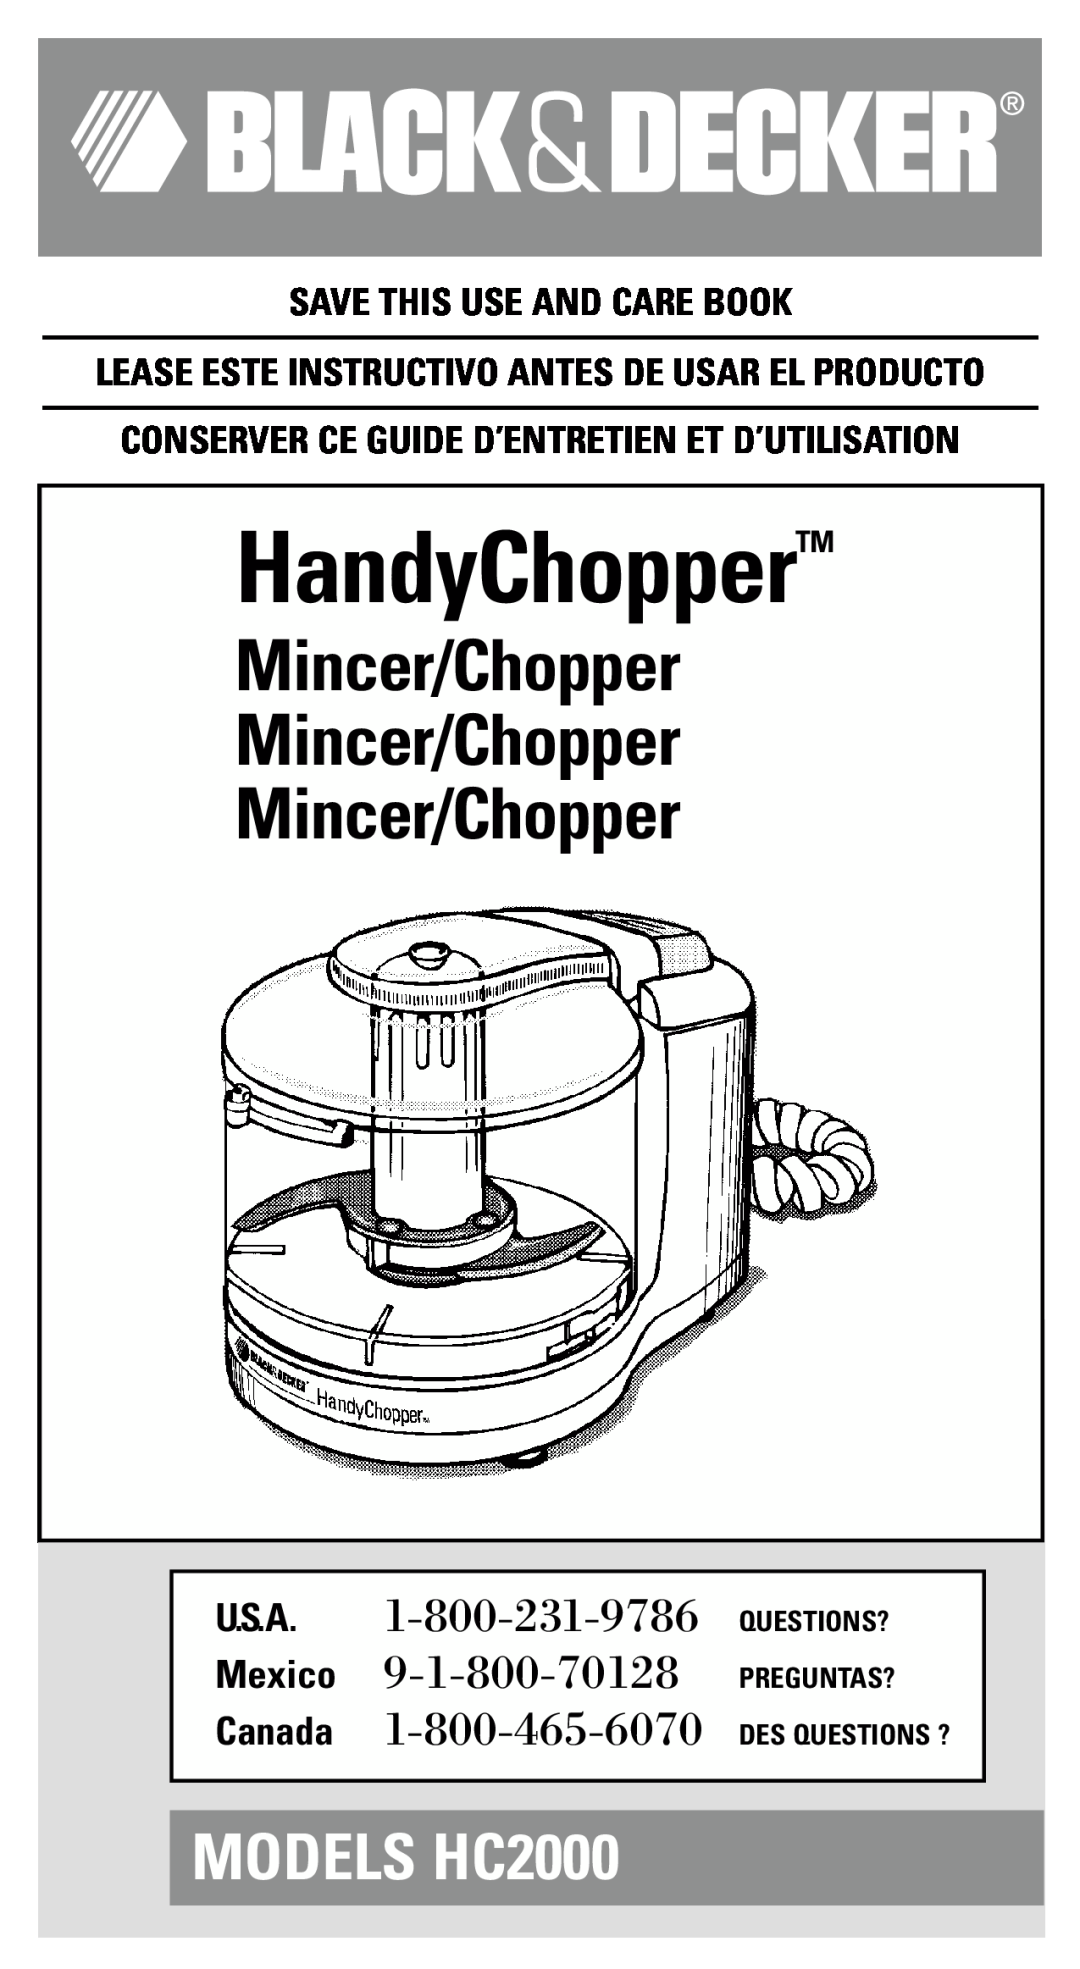 Black & Decker HC2000 manual U.S.A Mexico Canada, HandyChopperTM, Mincer/Chopper Mincer/Chopper Mincer/Chopper 